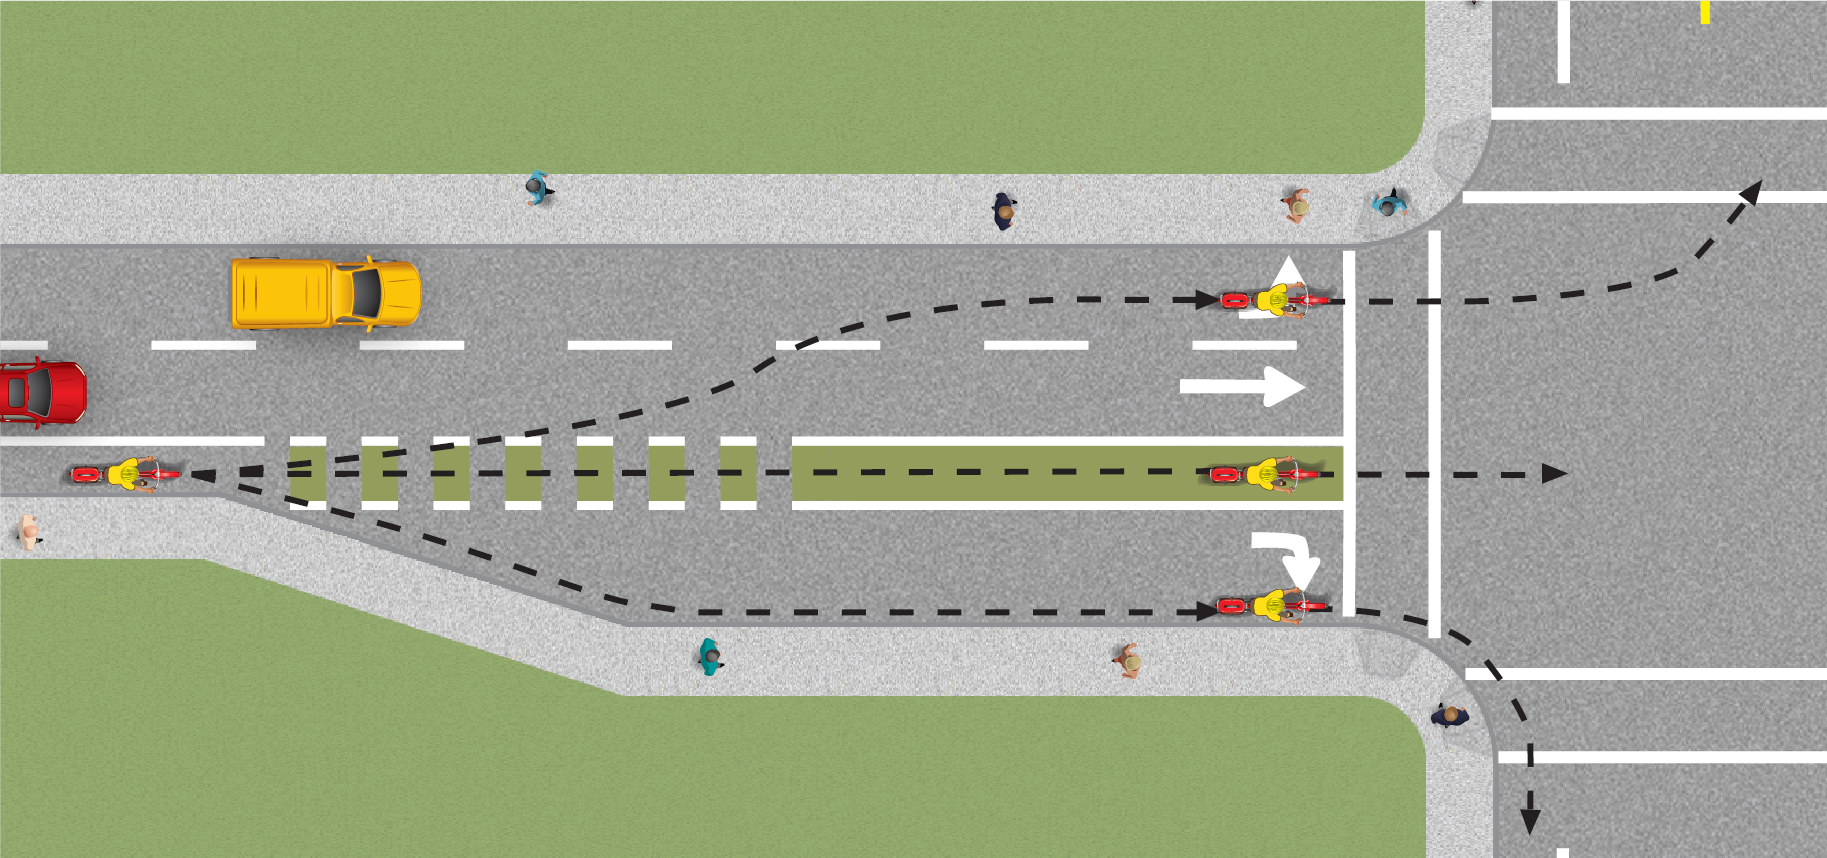 Image - Choose the correct lane diagram.